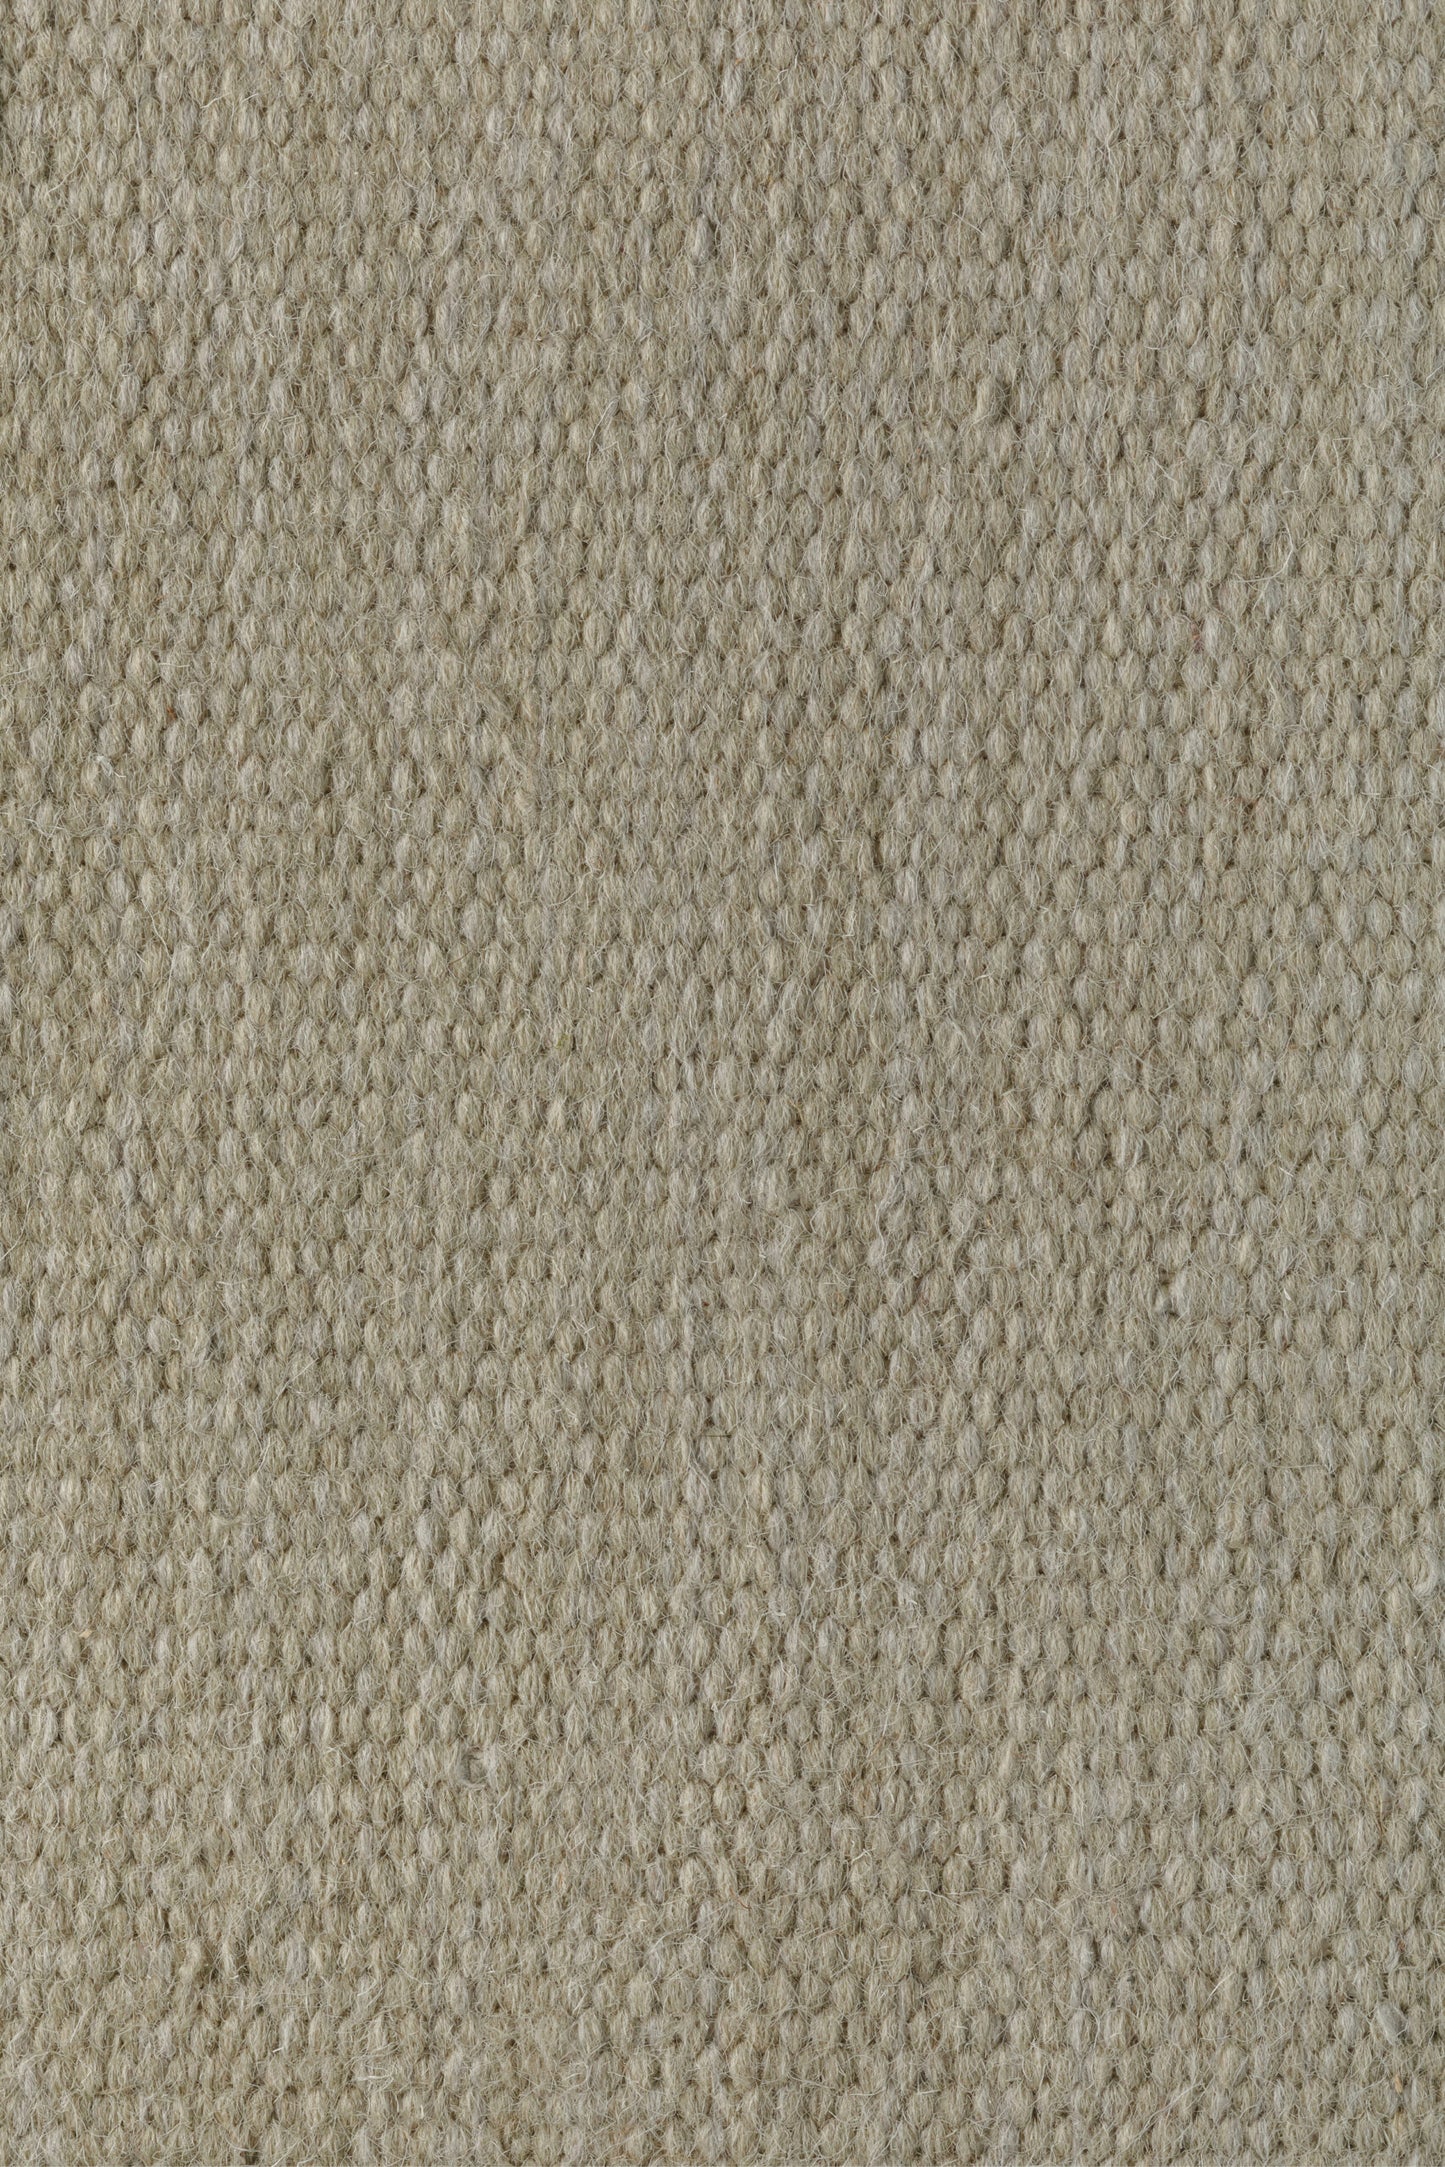 Plain Wool Melange Sand